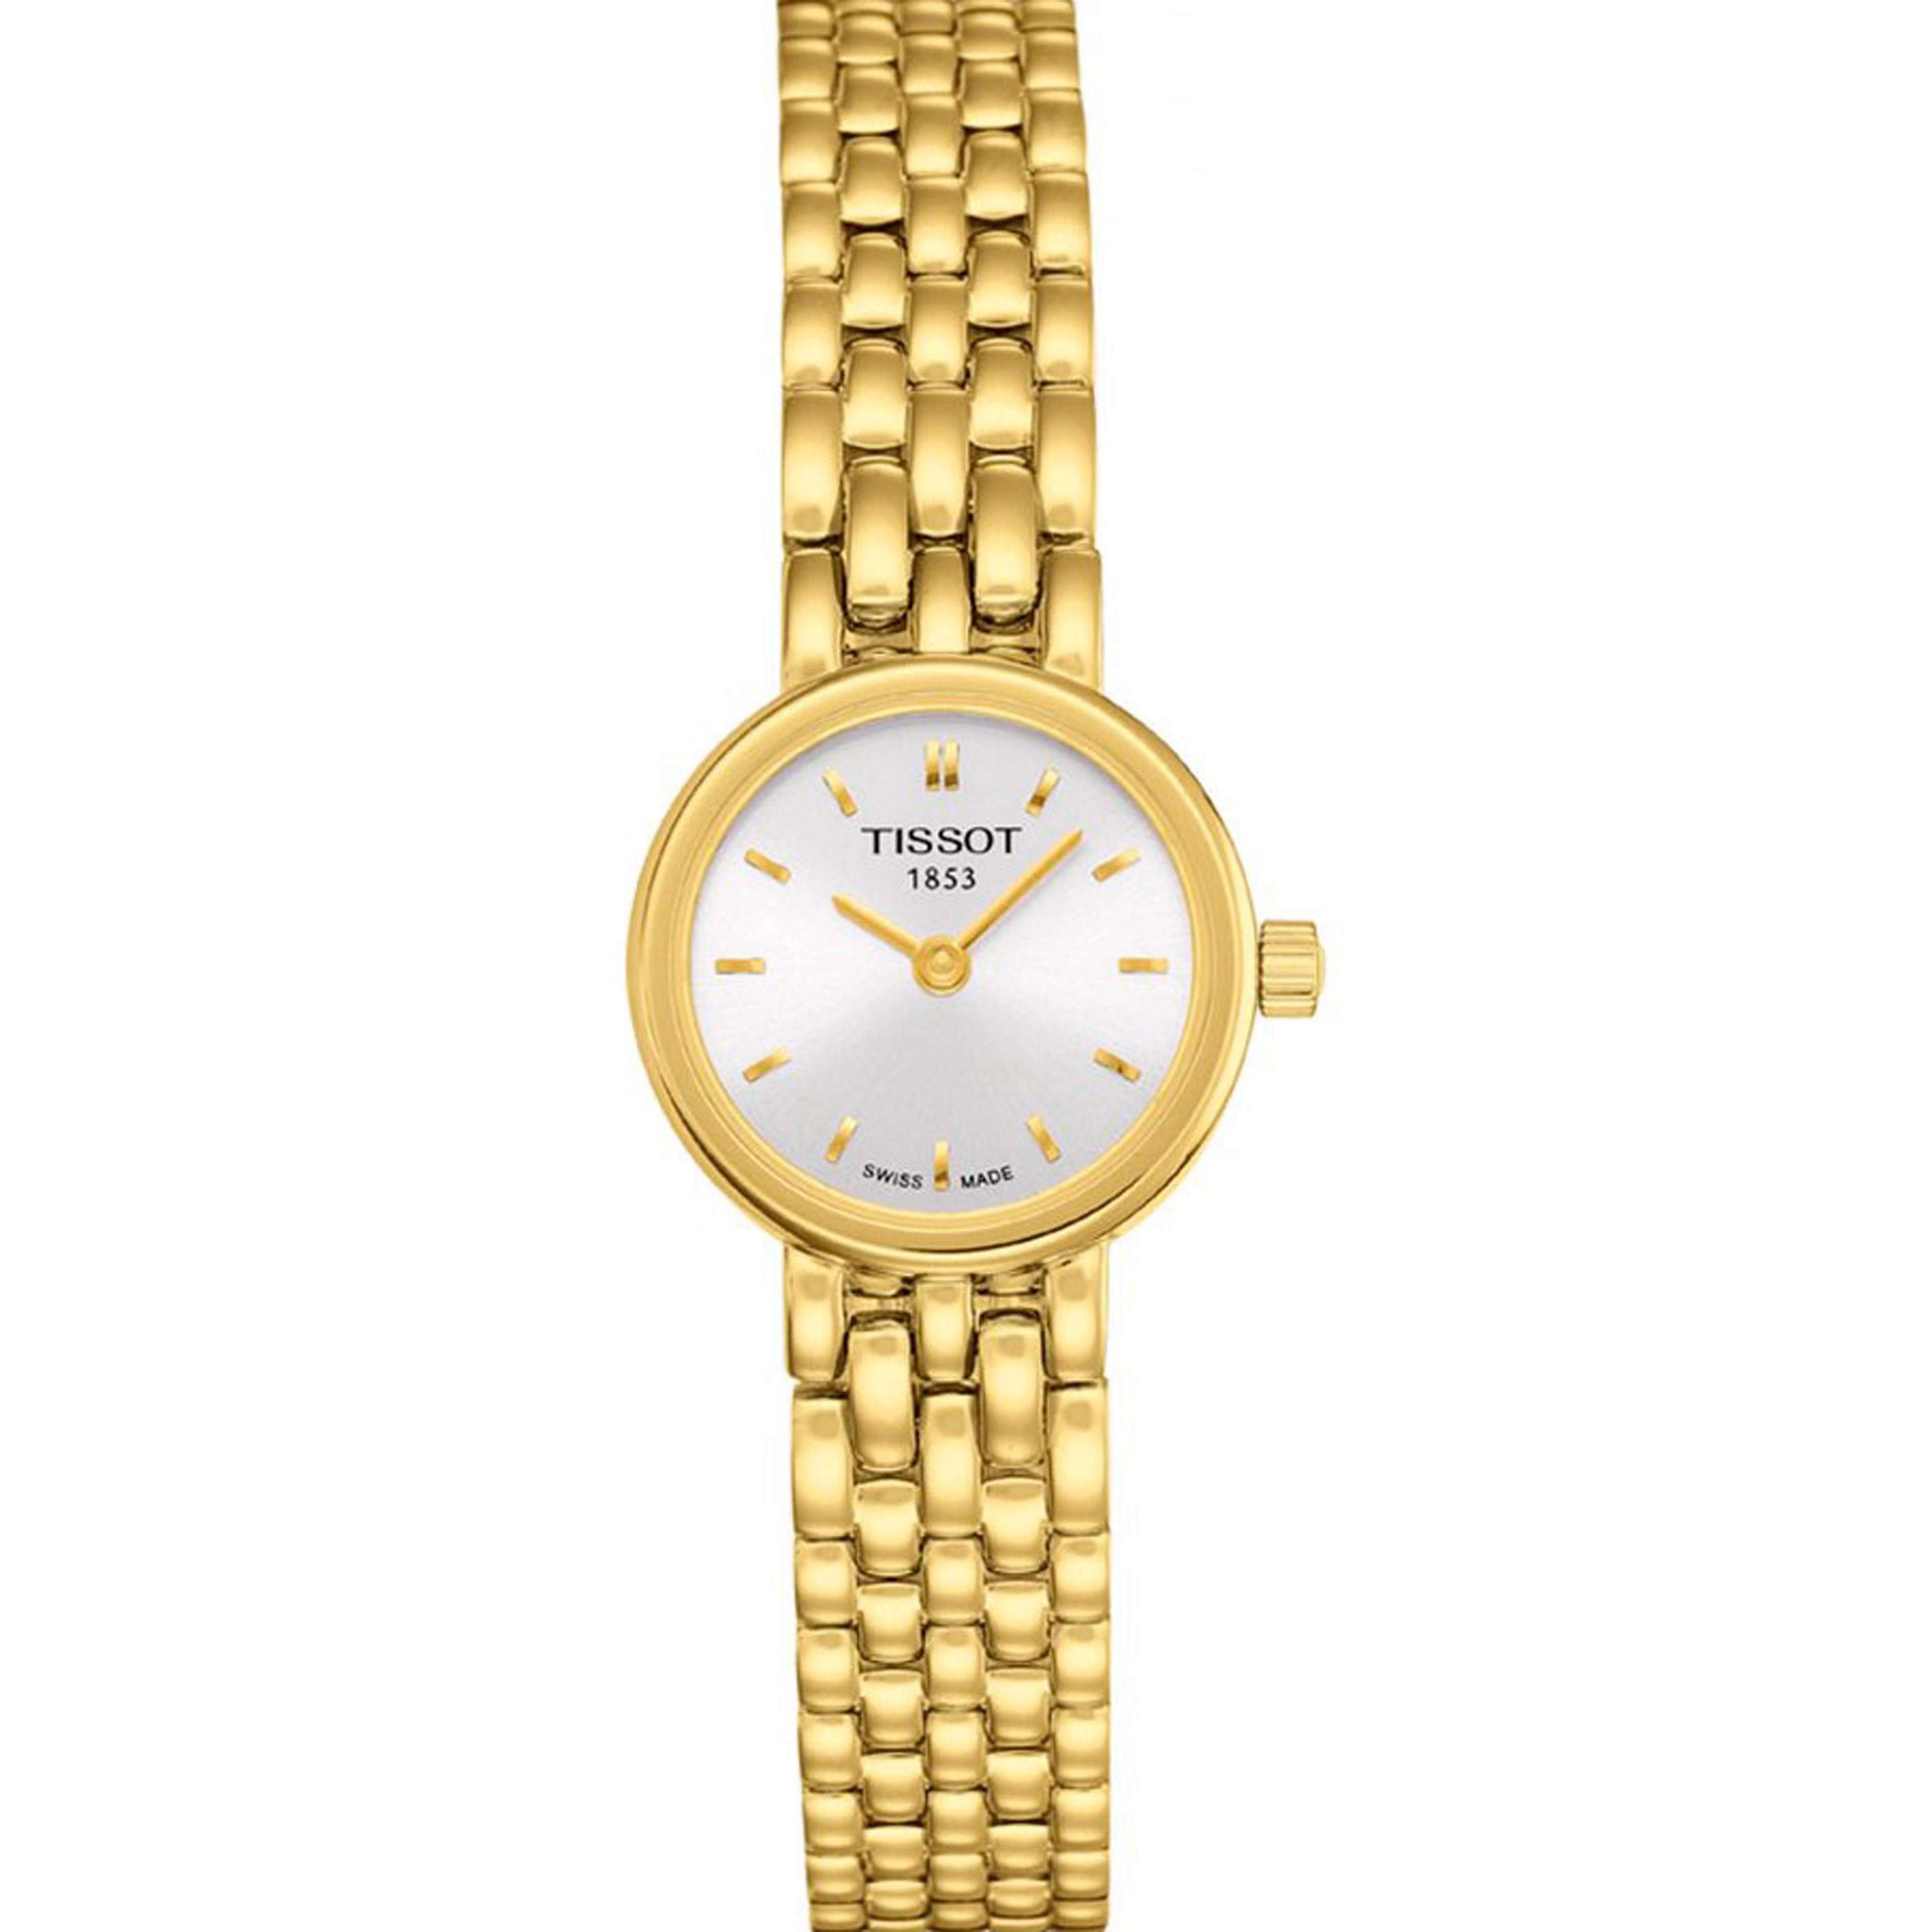 Reloj Tissot Para Mujer Clasico Elegante Color Dorado Supershop